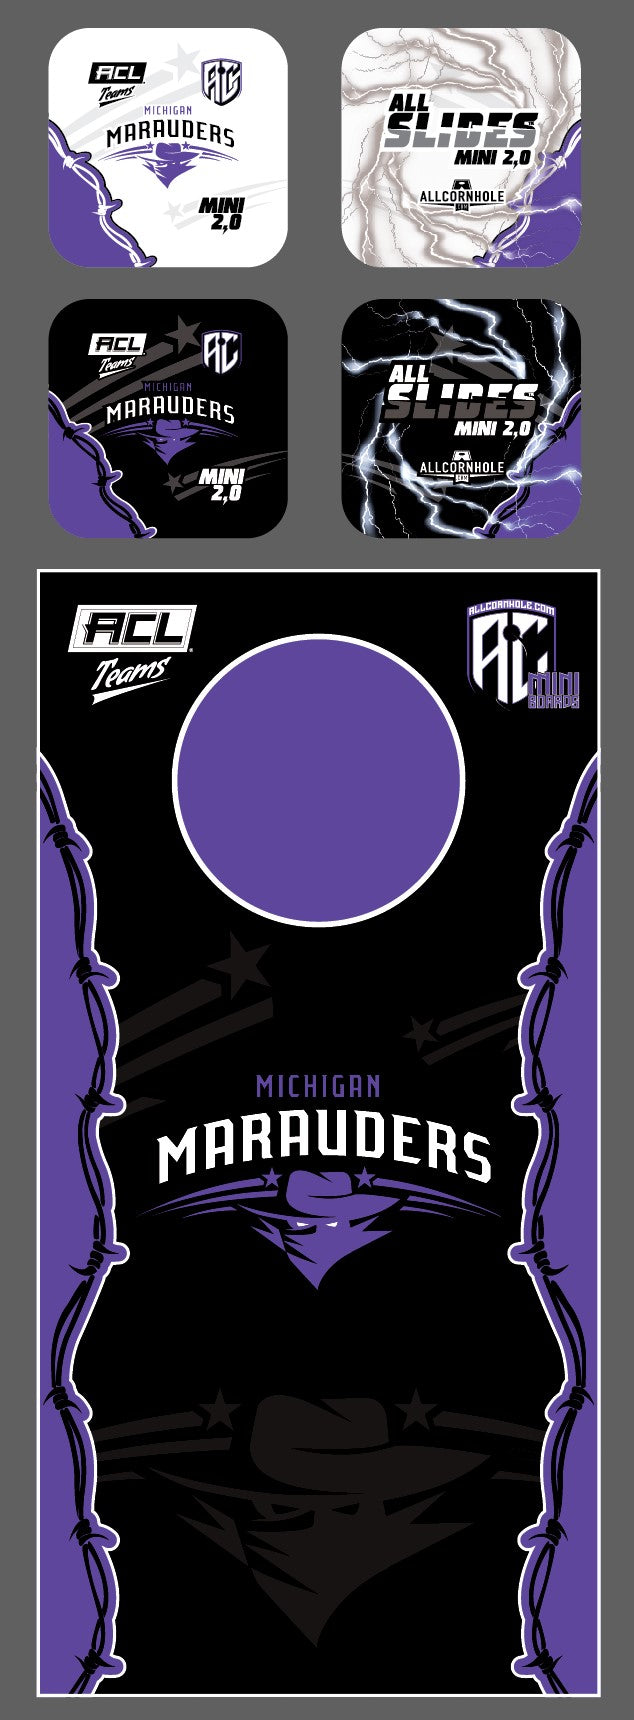 ACL Teams mini Cornhole Board Set - Michigan Marauders